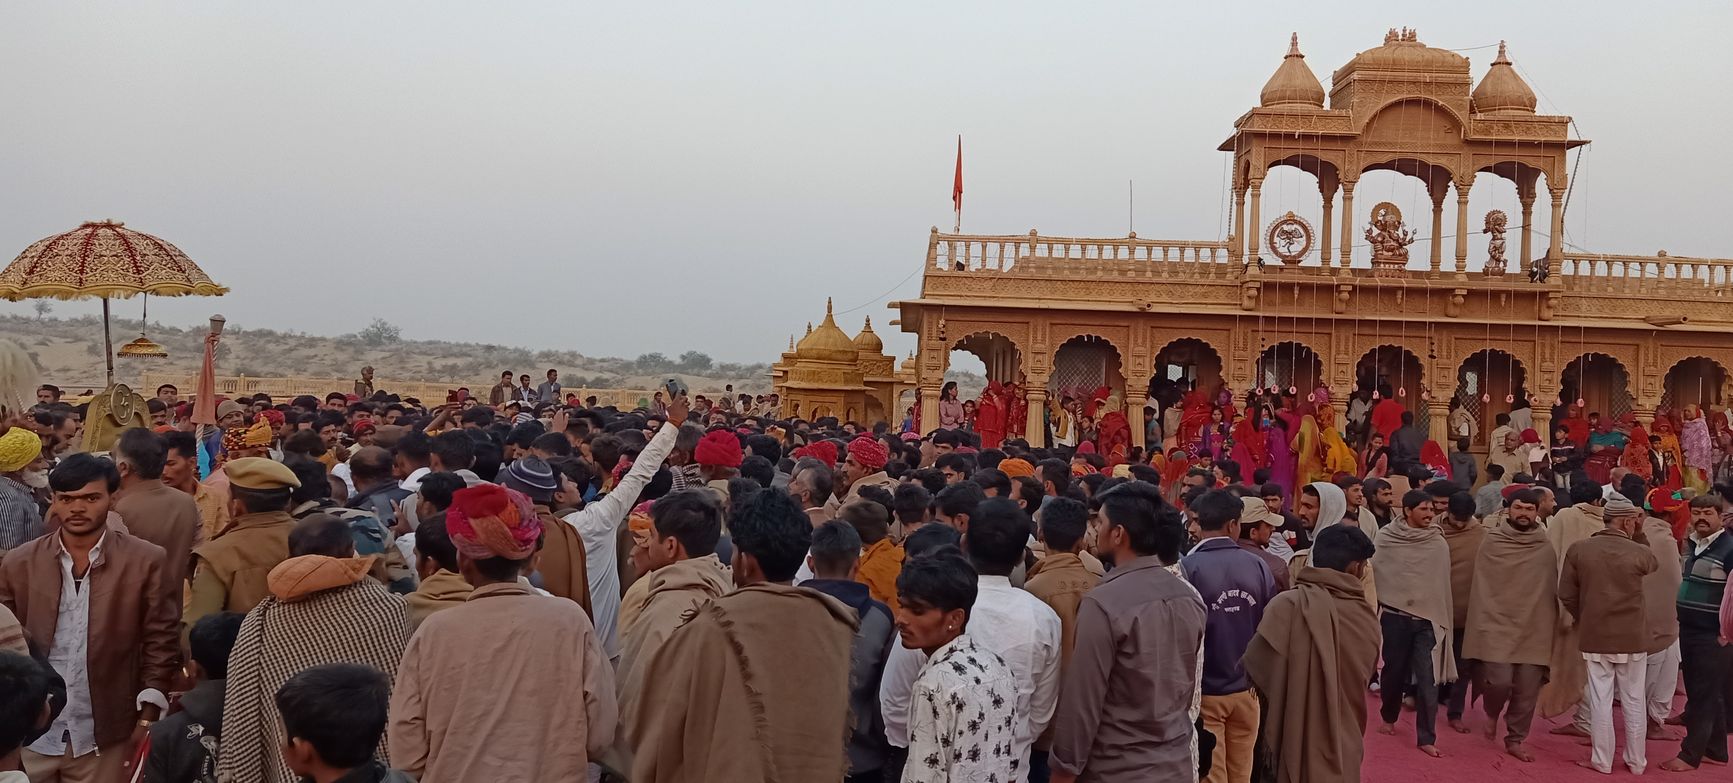 Mass groups gathered at fair on Mahashivratri festival in jaisalmer